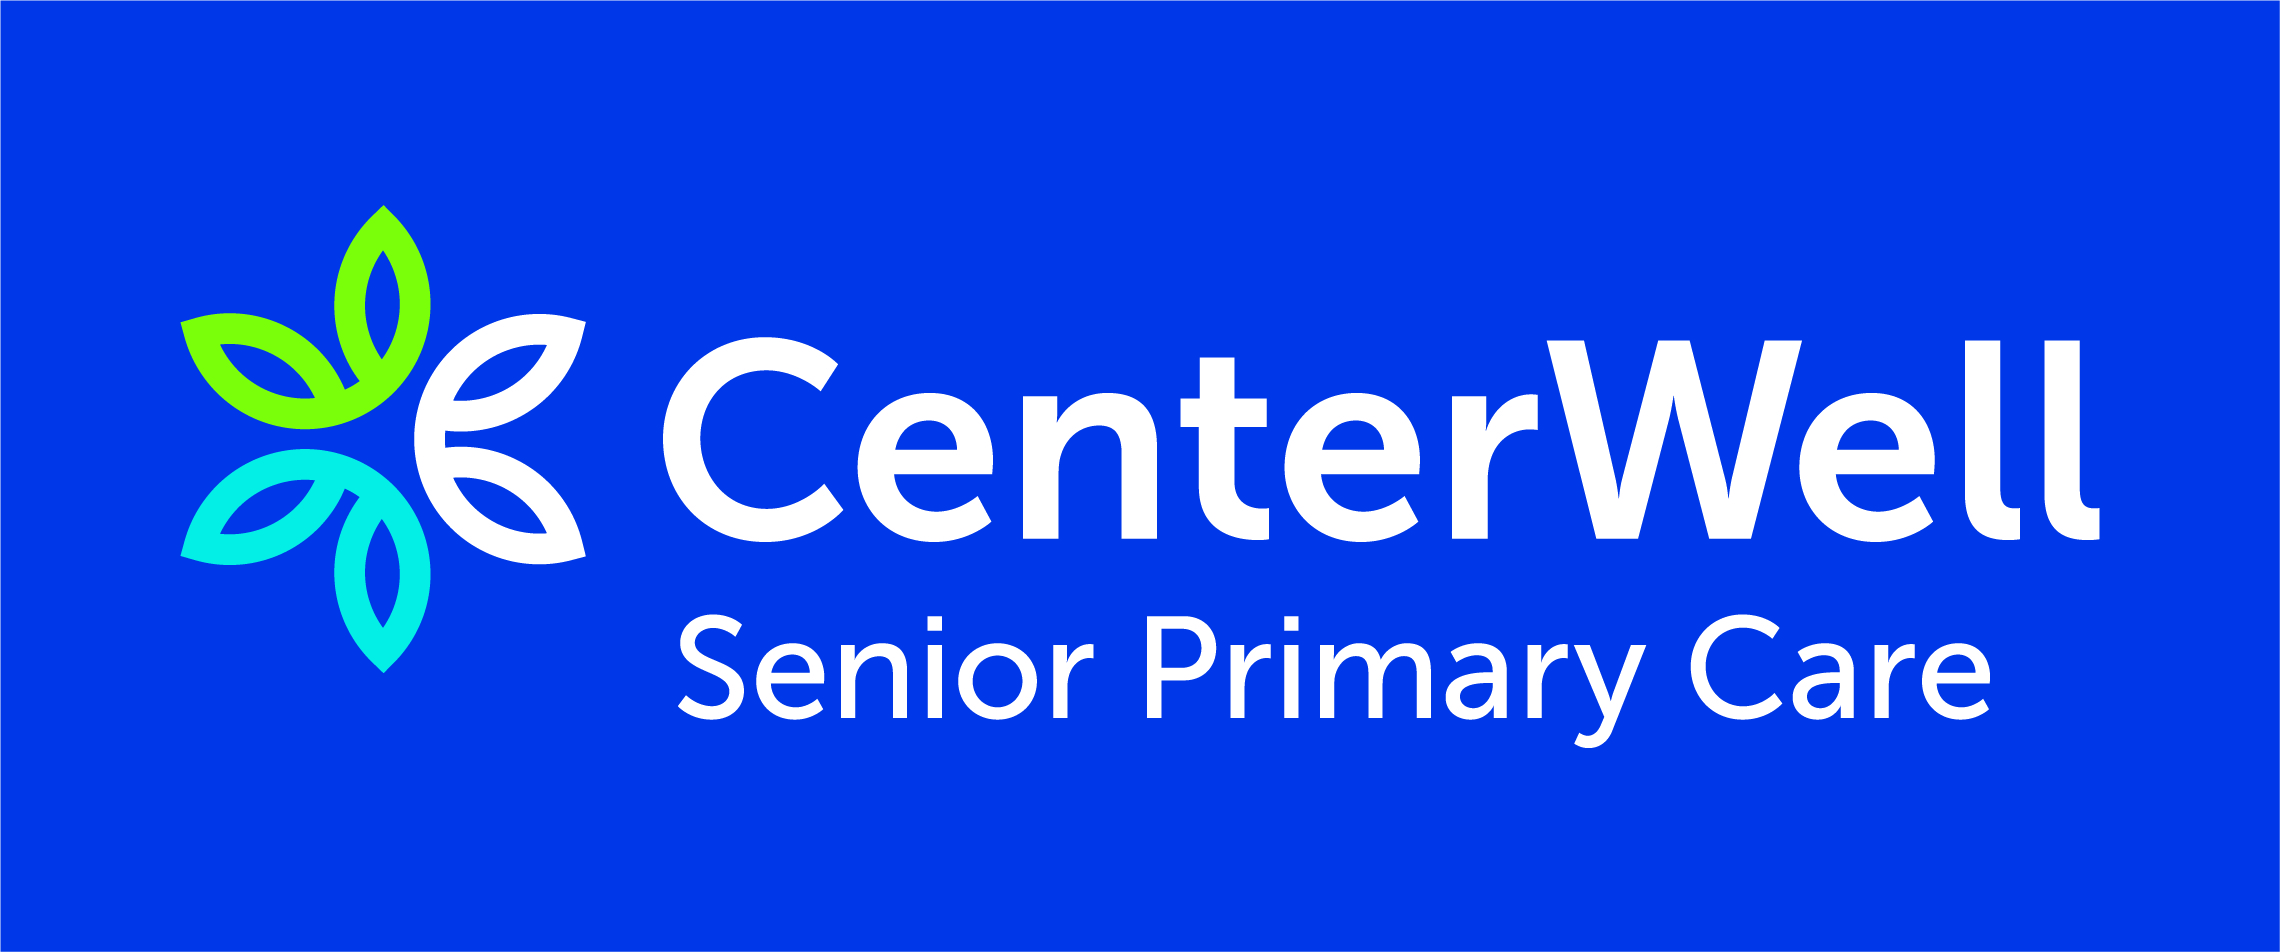 Centerwell Senior Primary Care Homeland Park